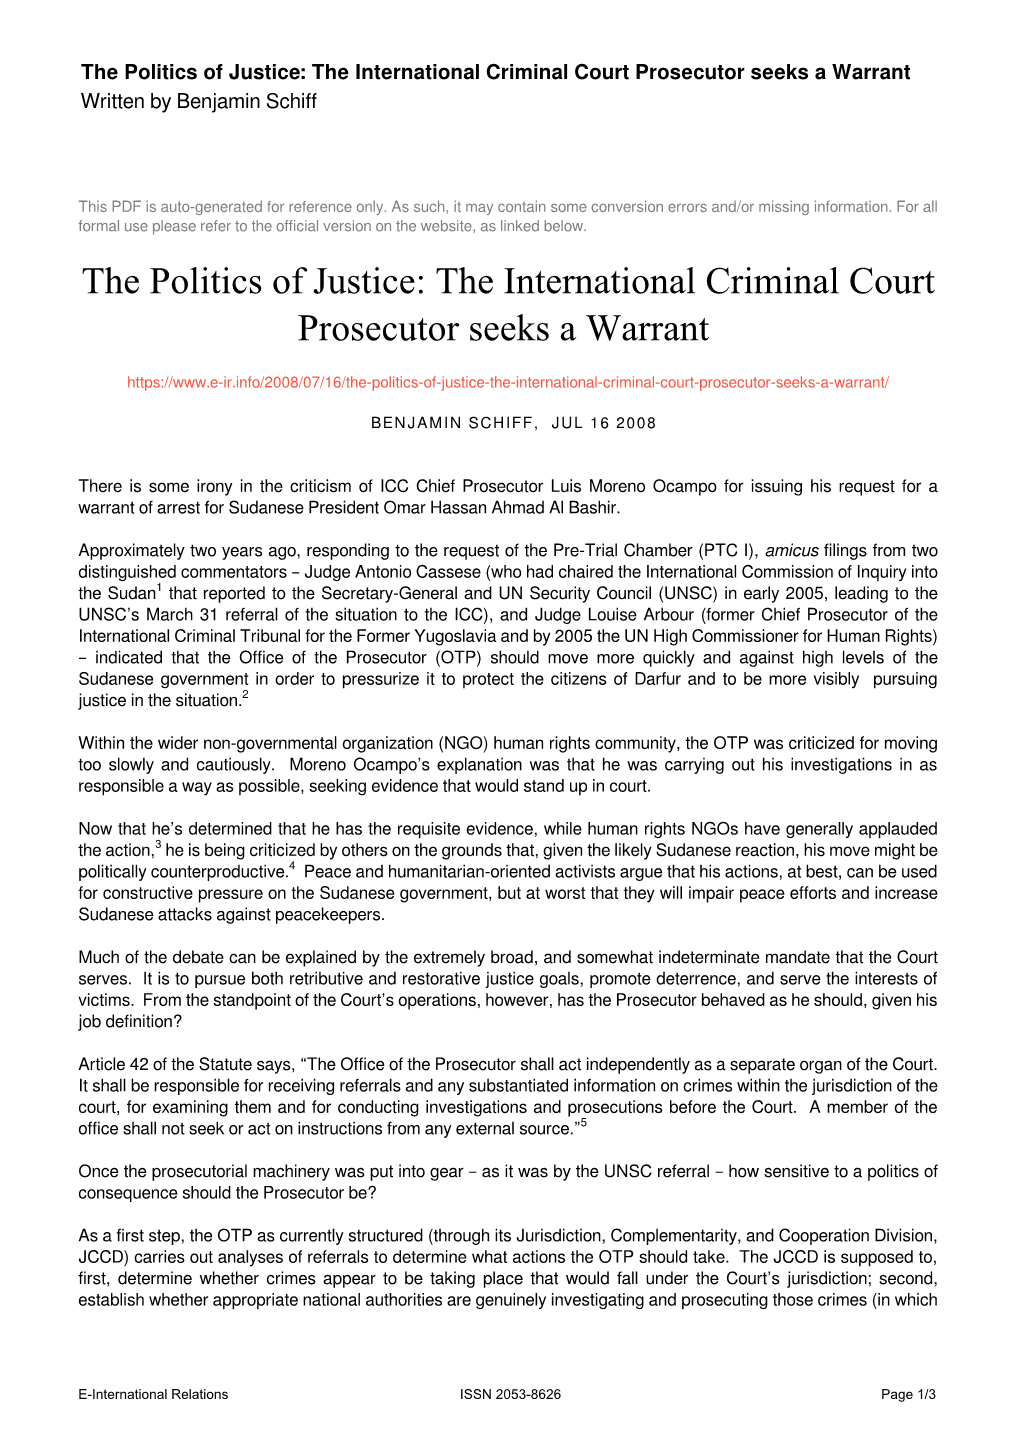 The International Criminal Court Prosecutor Seeks a Warrant Written by Benjamin Schiff